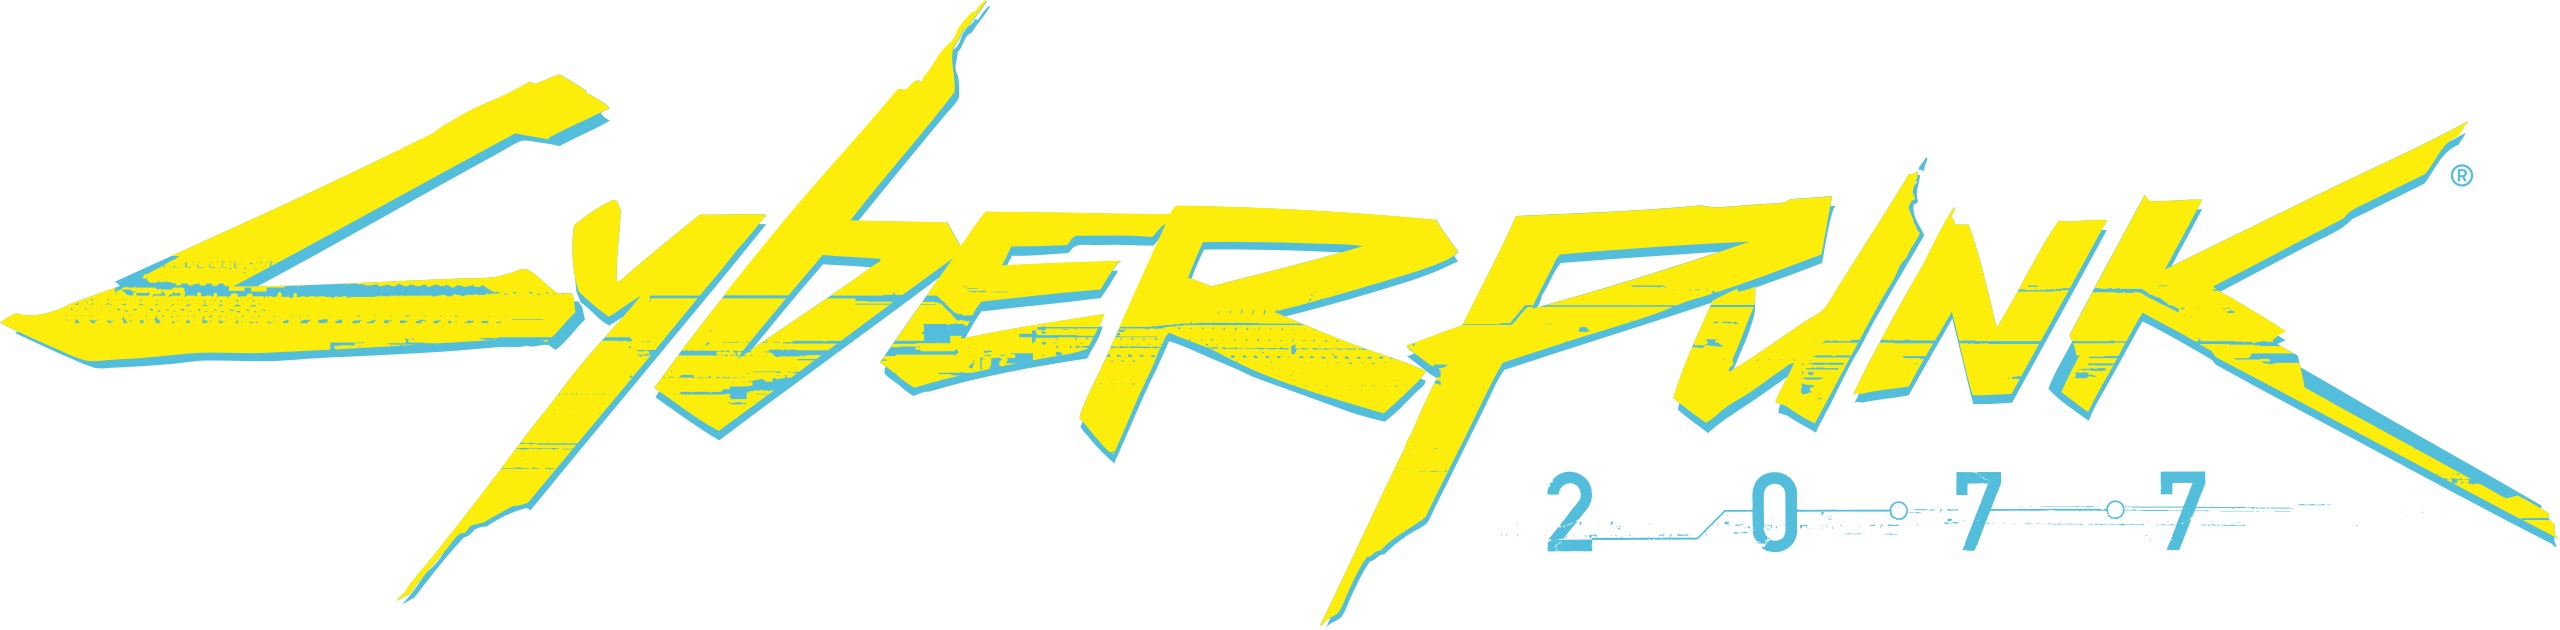 Cyberpunk 2077 text logo